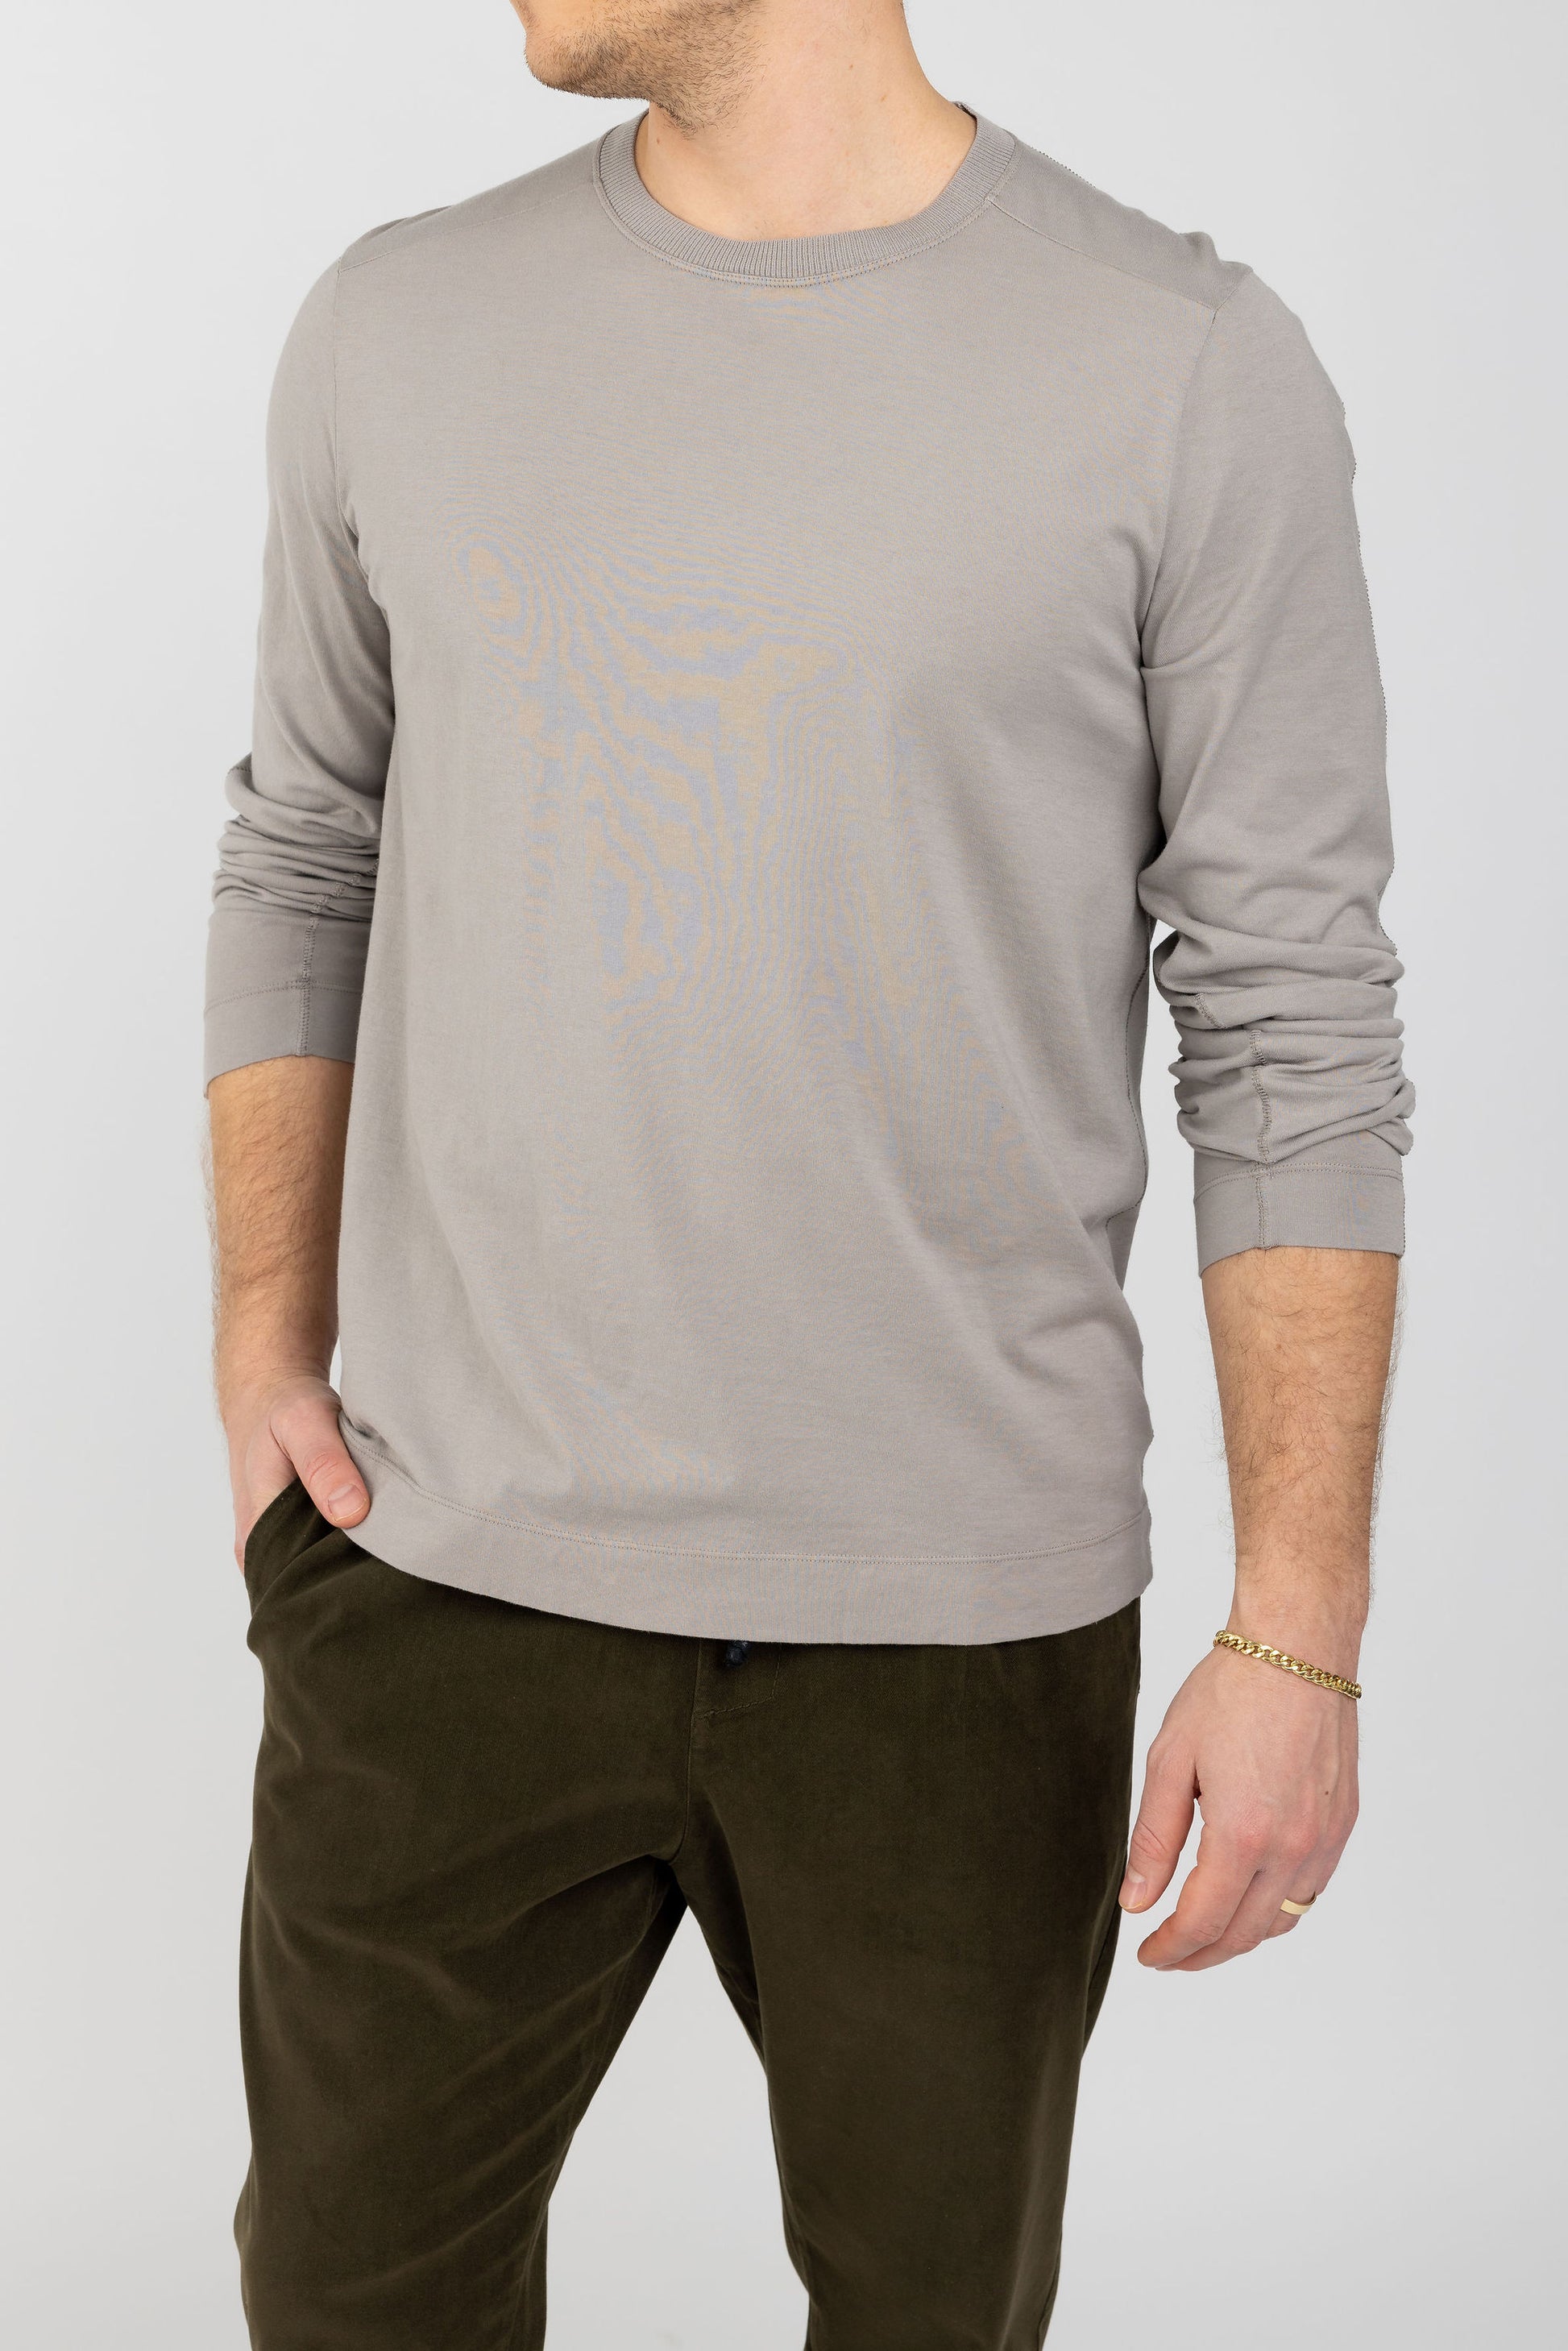 TRANSIT Long Sleeve T-Shirt in Stone